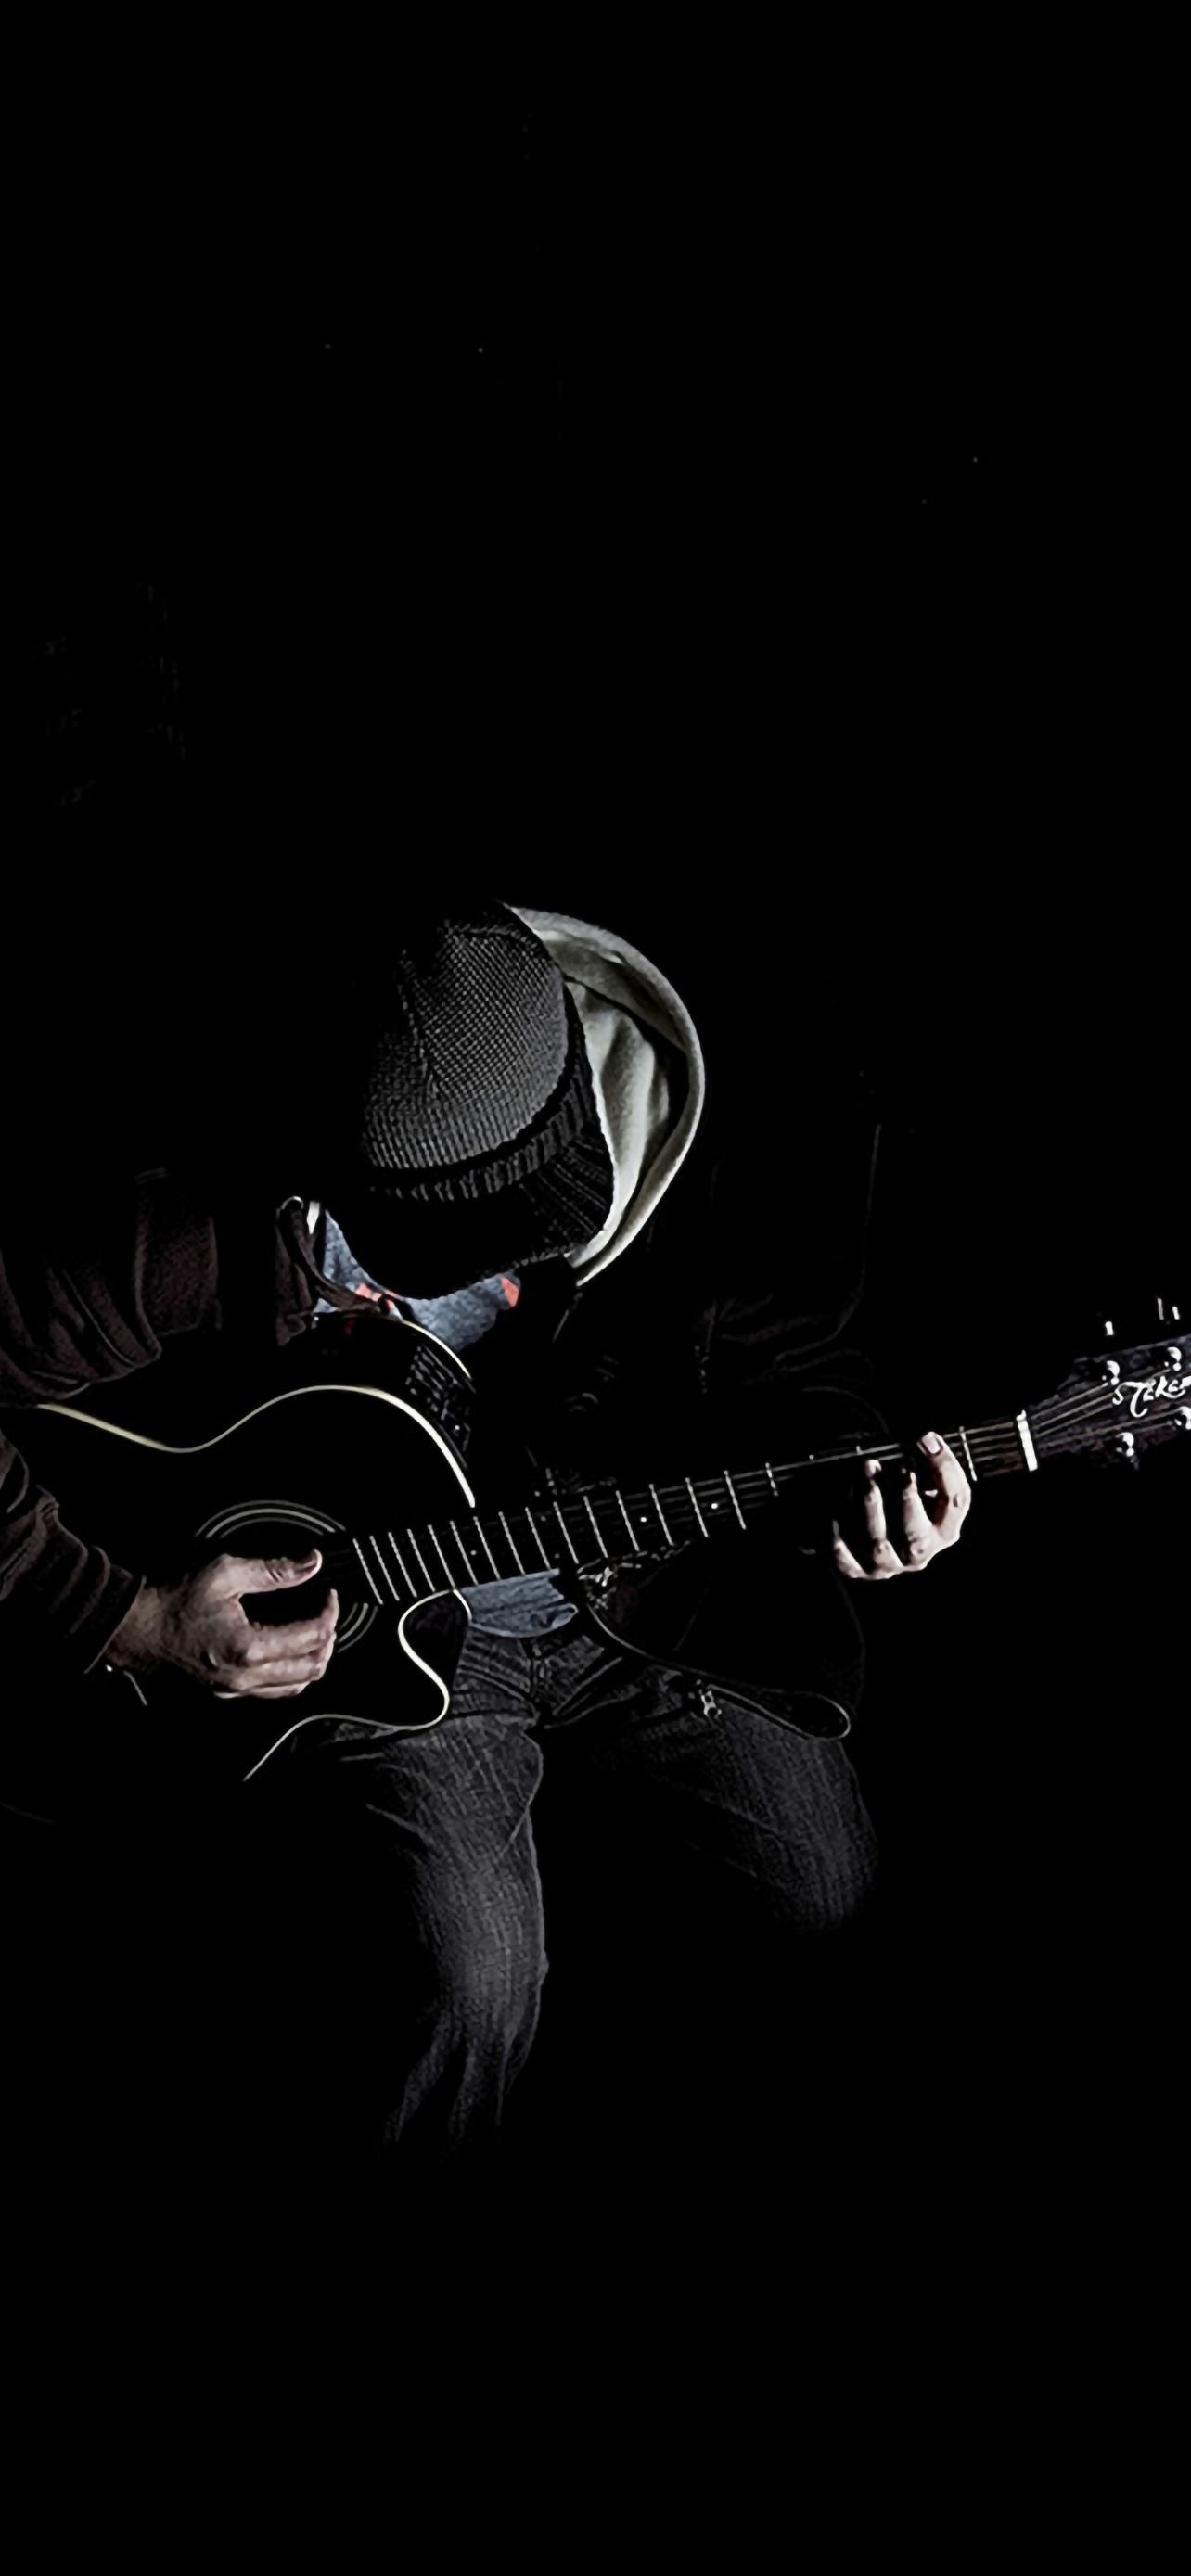 A man playing guitar in the dark - Music, dark, guitar